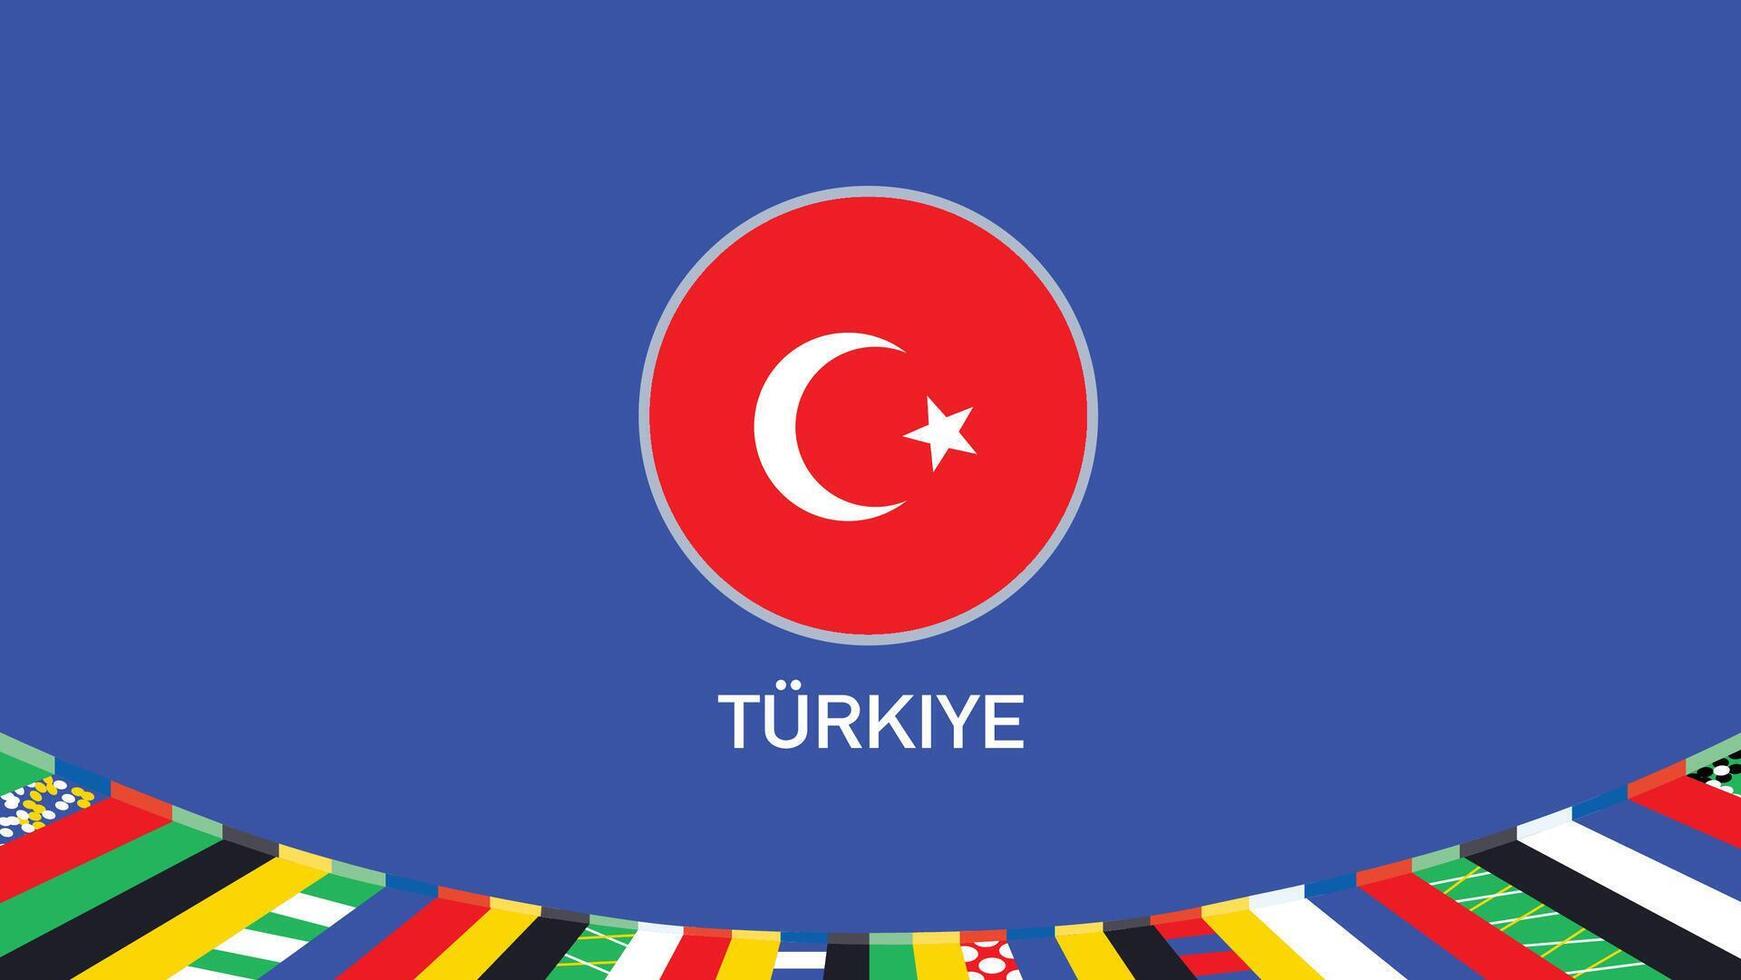 Turkiye Emblem Flag Teams European Nations 2024 Abstract Countries European Germany Football Symbol Logo Design Illustration vector